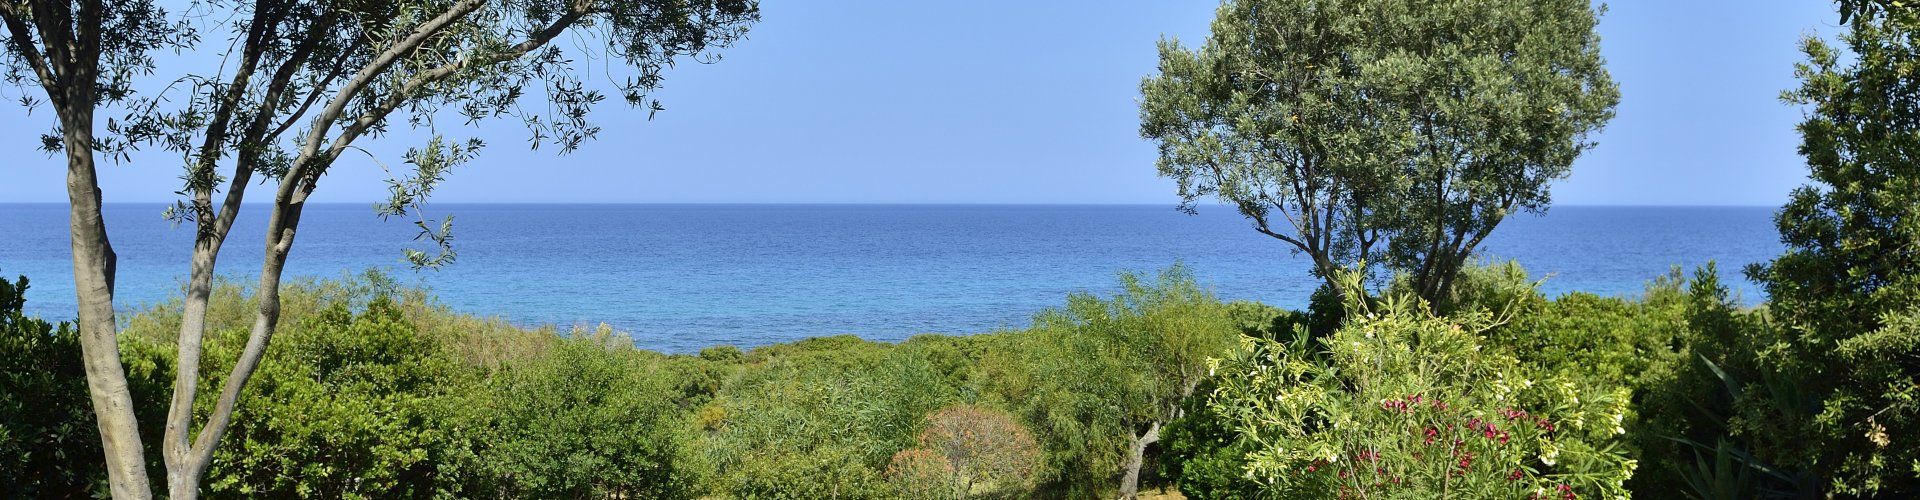 View across the wide garden towards the blue sea